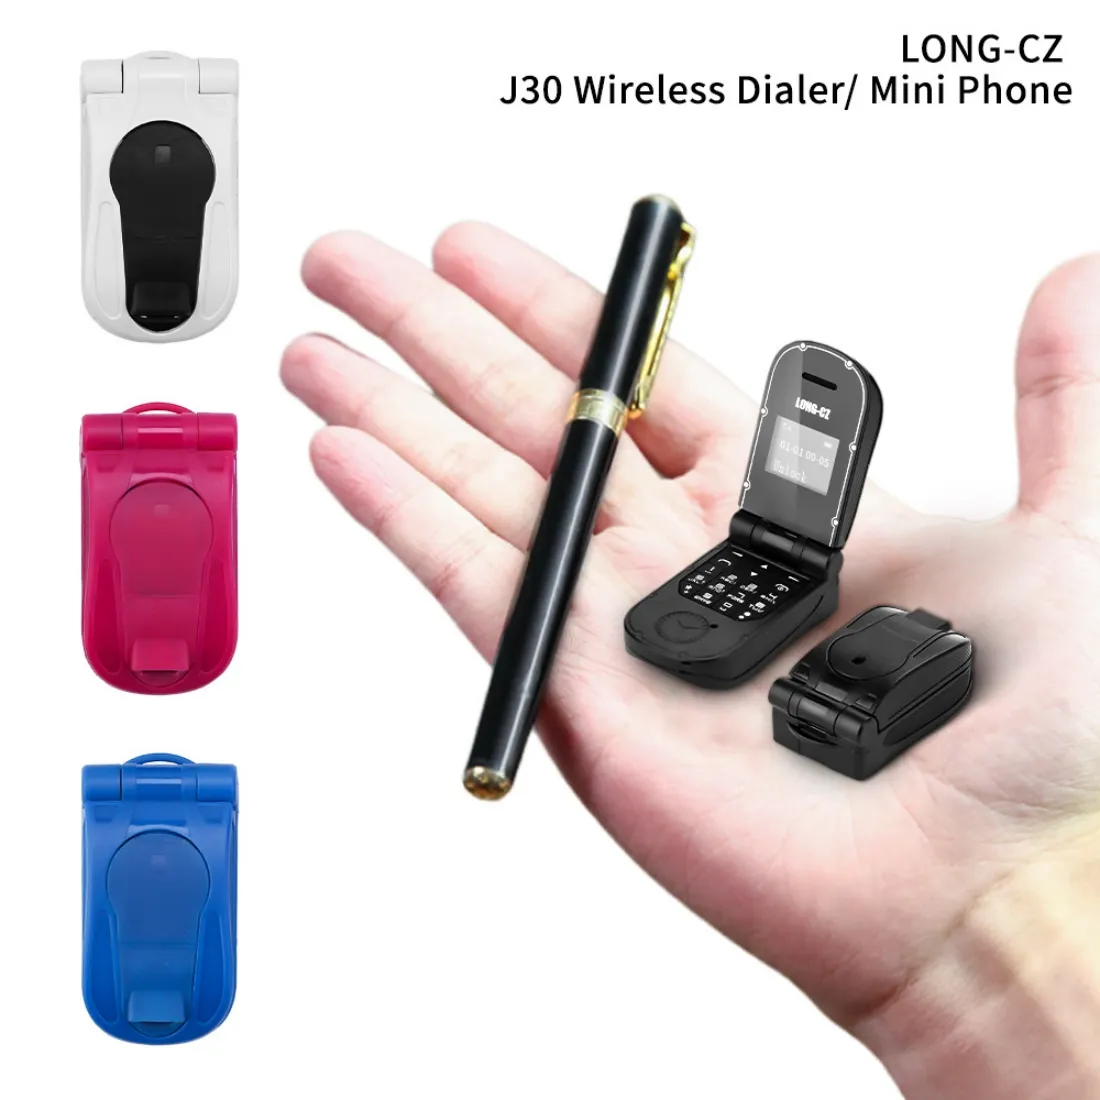 En yeni J30 mini clamshell cep telefonu 0.66 "Kilidi açılmış tek Sim Magic Voice Kablosuz Bluetooth Dialer Handfree Mini Küçük Flip Cep Telefon